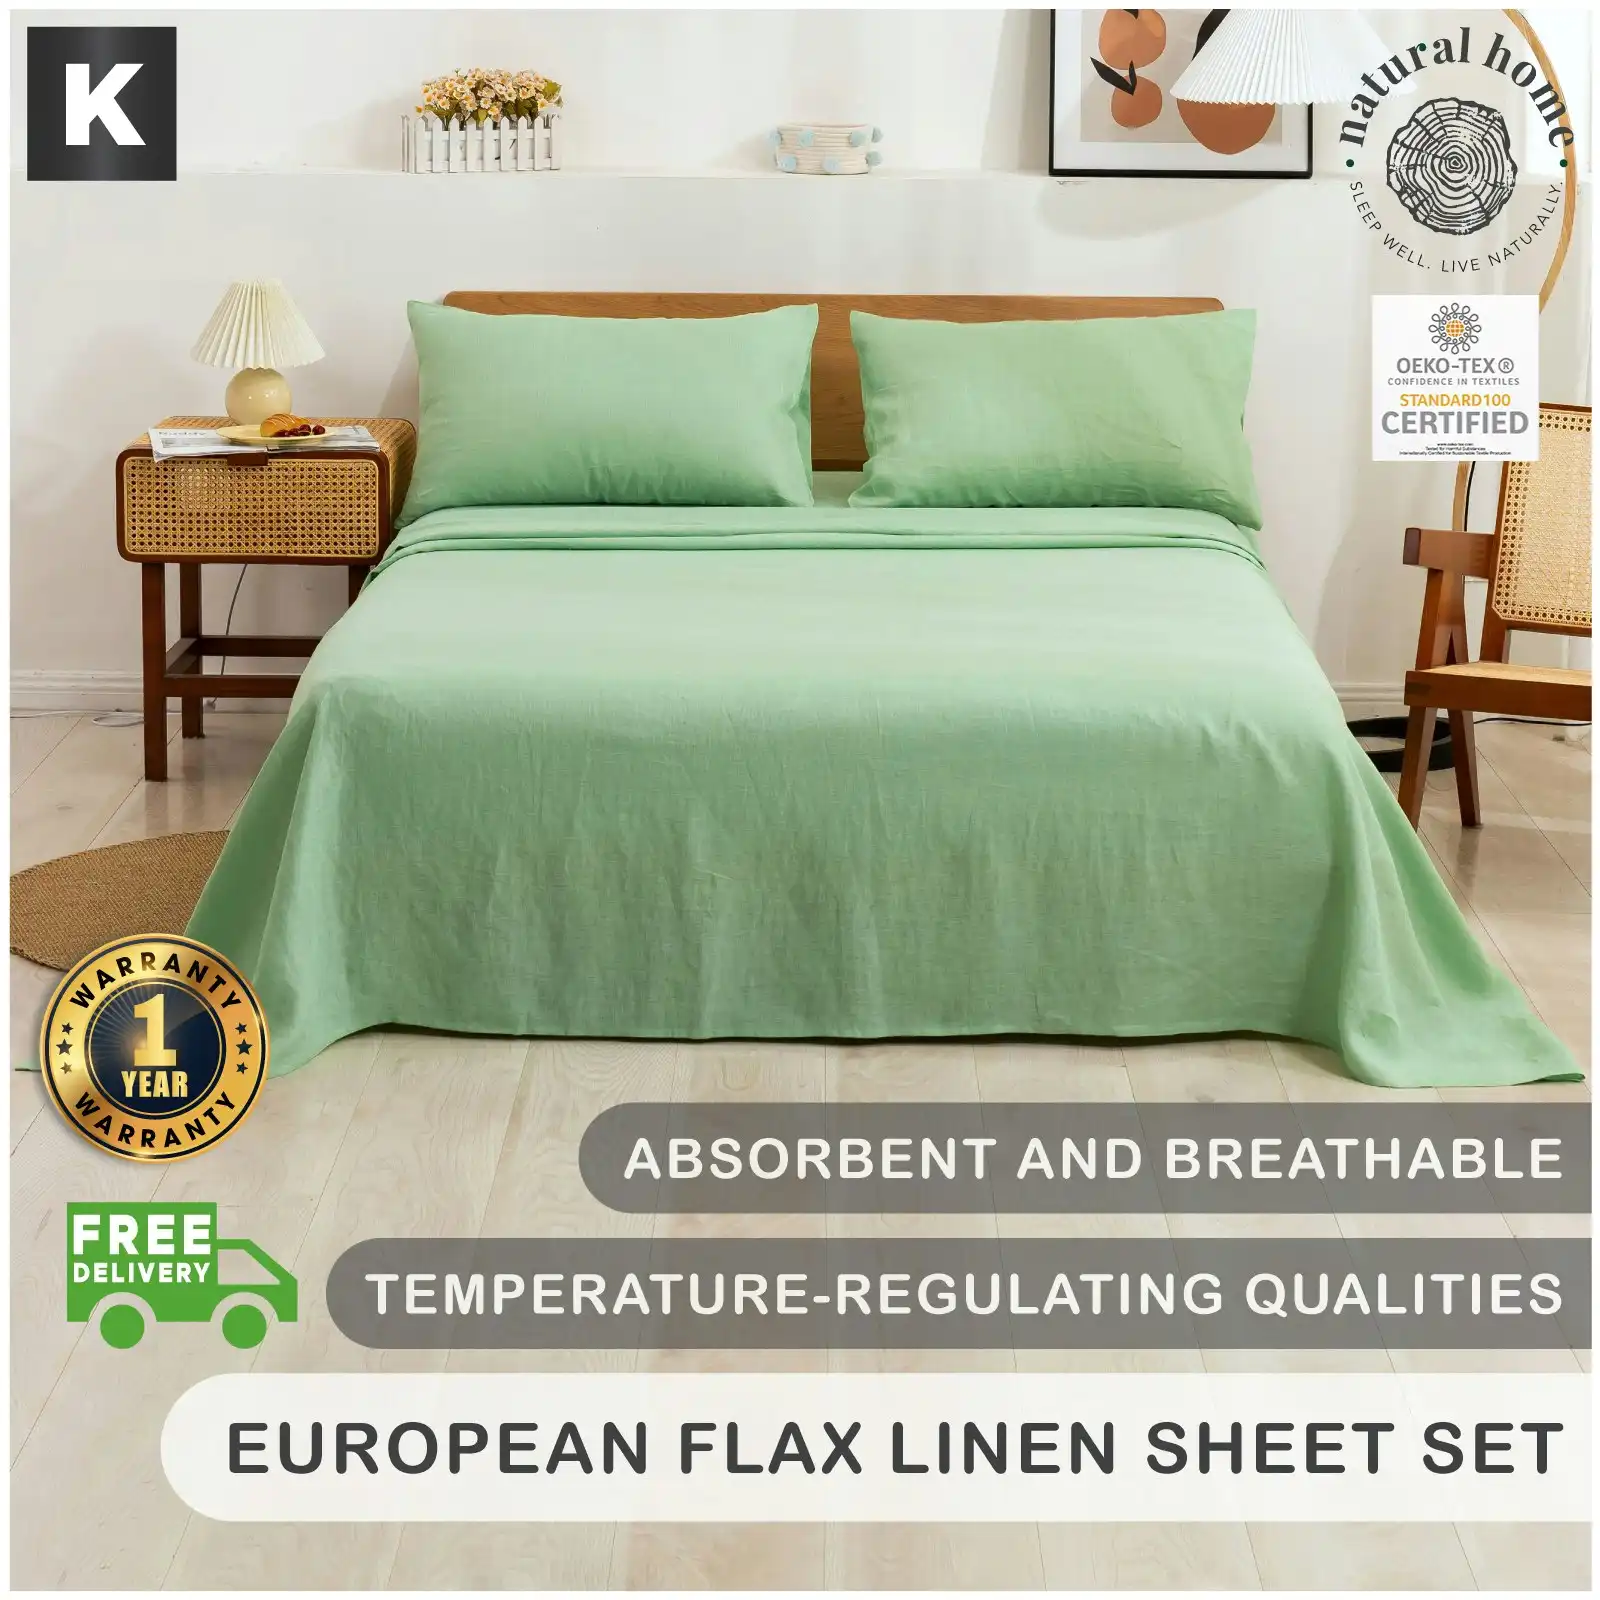 Natural Home 100% European Flax Linen Sheet Set - Sage - King Bed